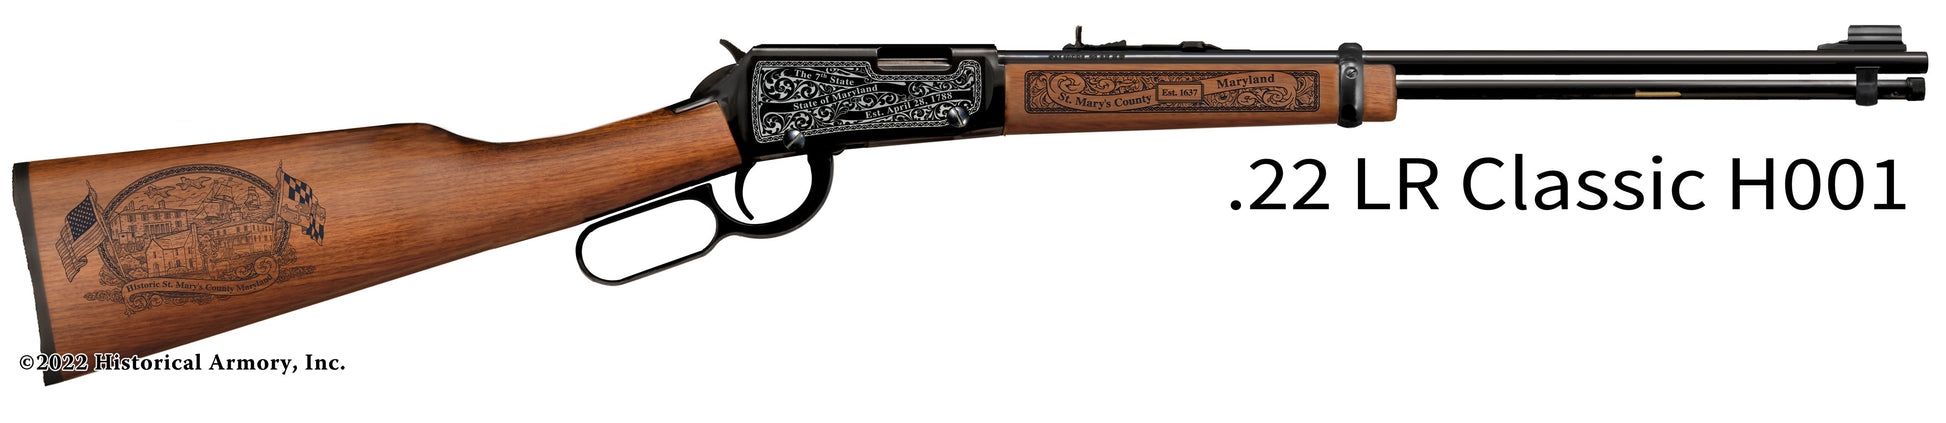 St. Marys County Maryland Engraved Henry H001 Rifle